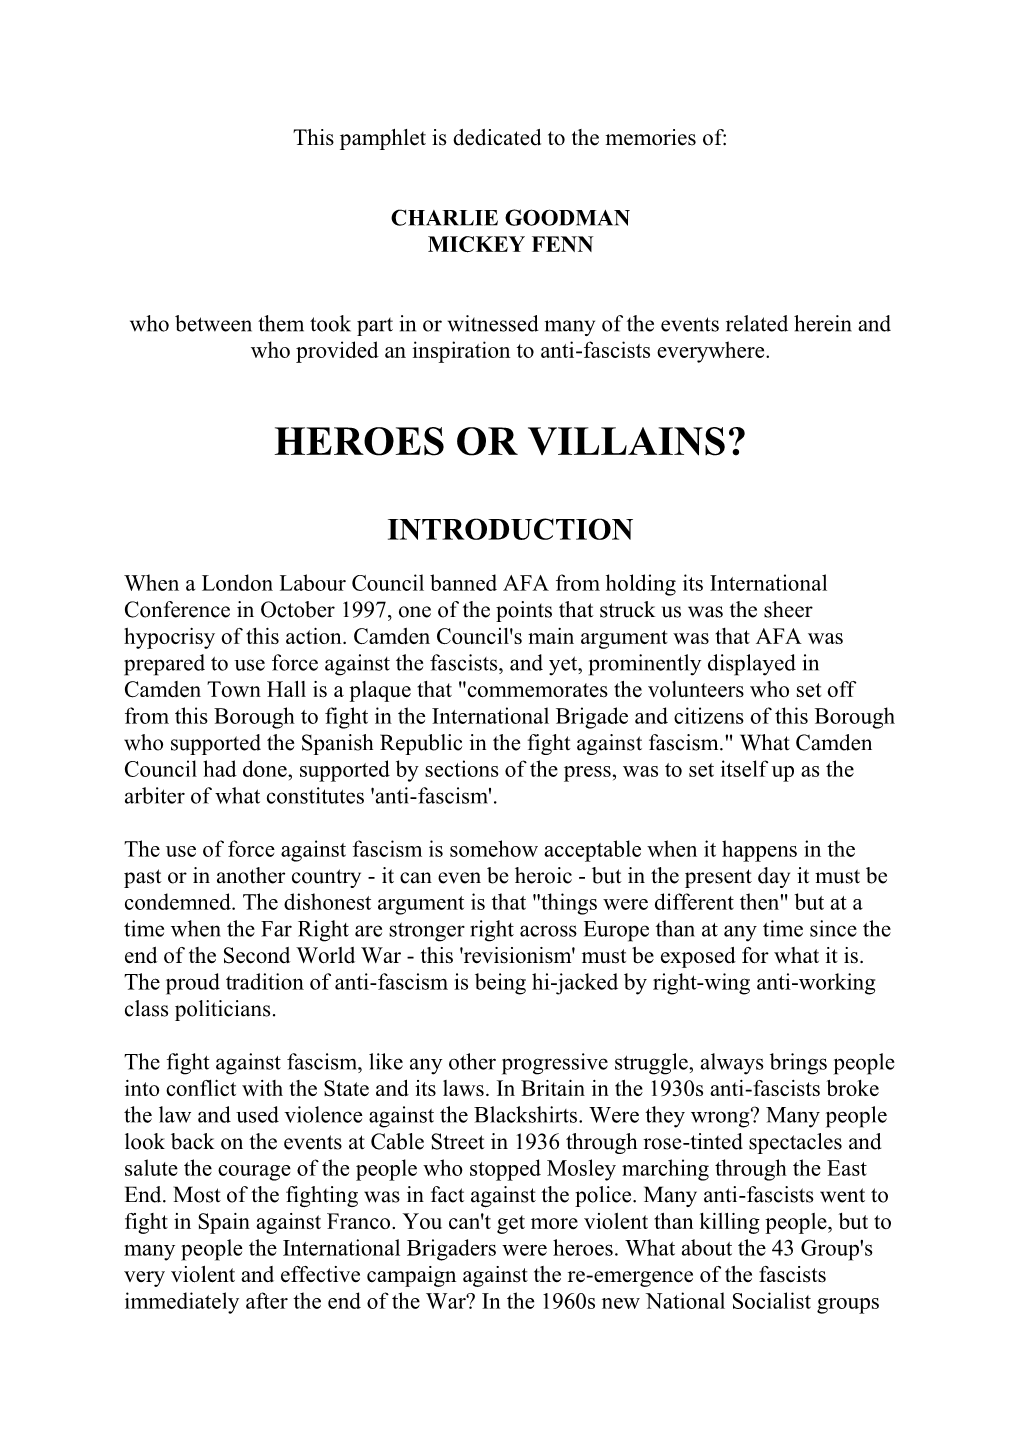 Heroes Or Villains?